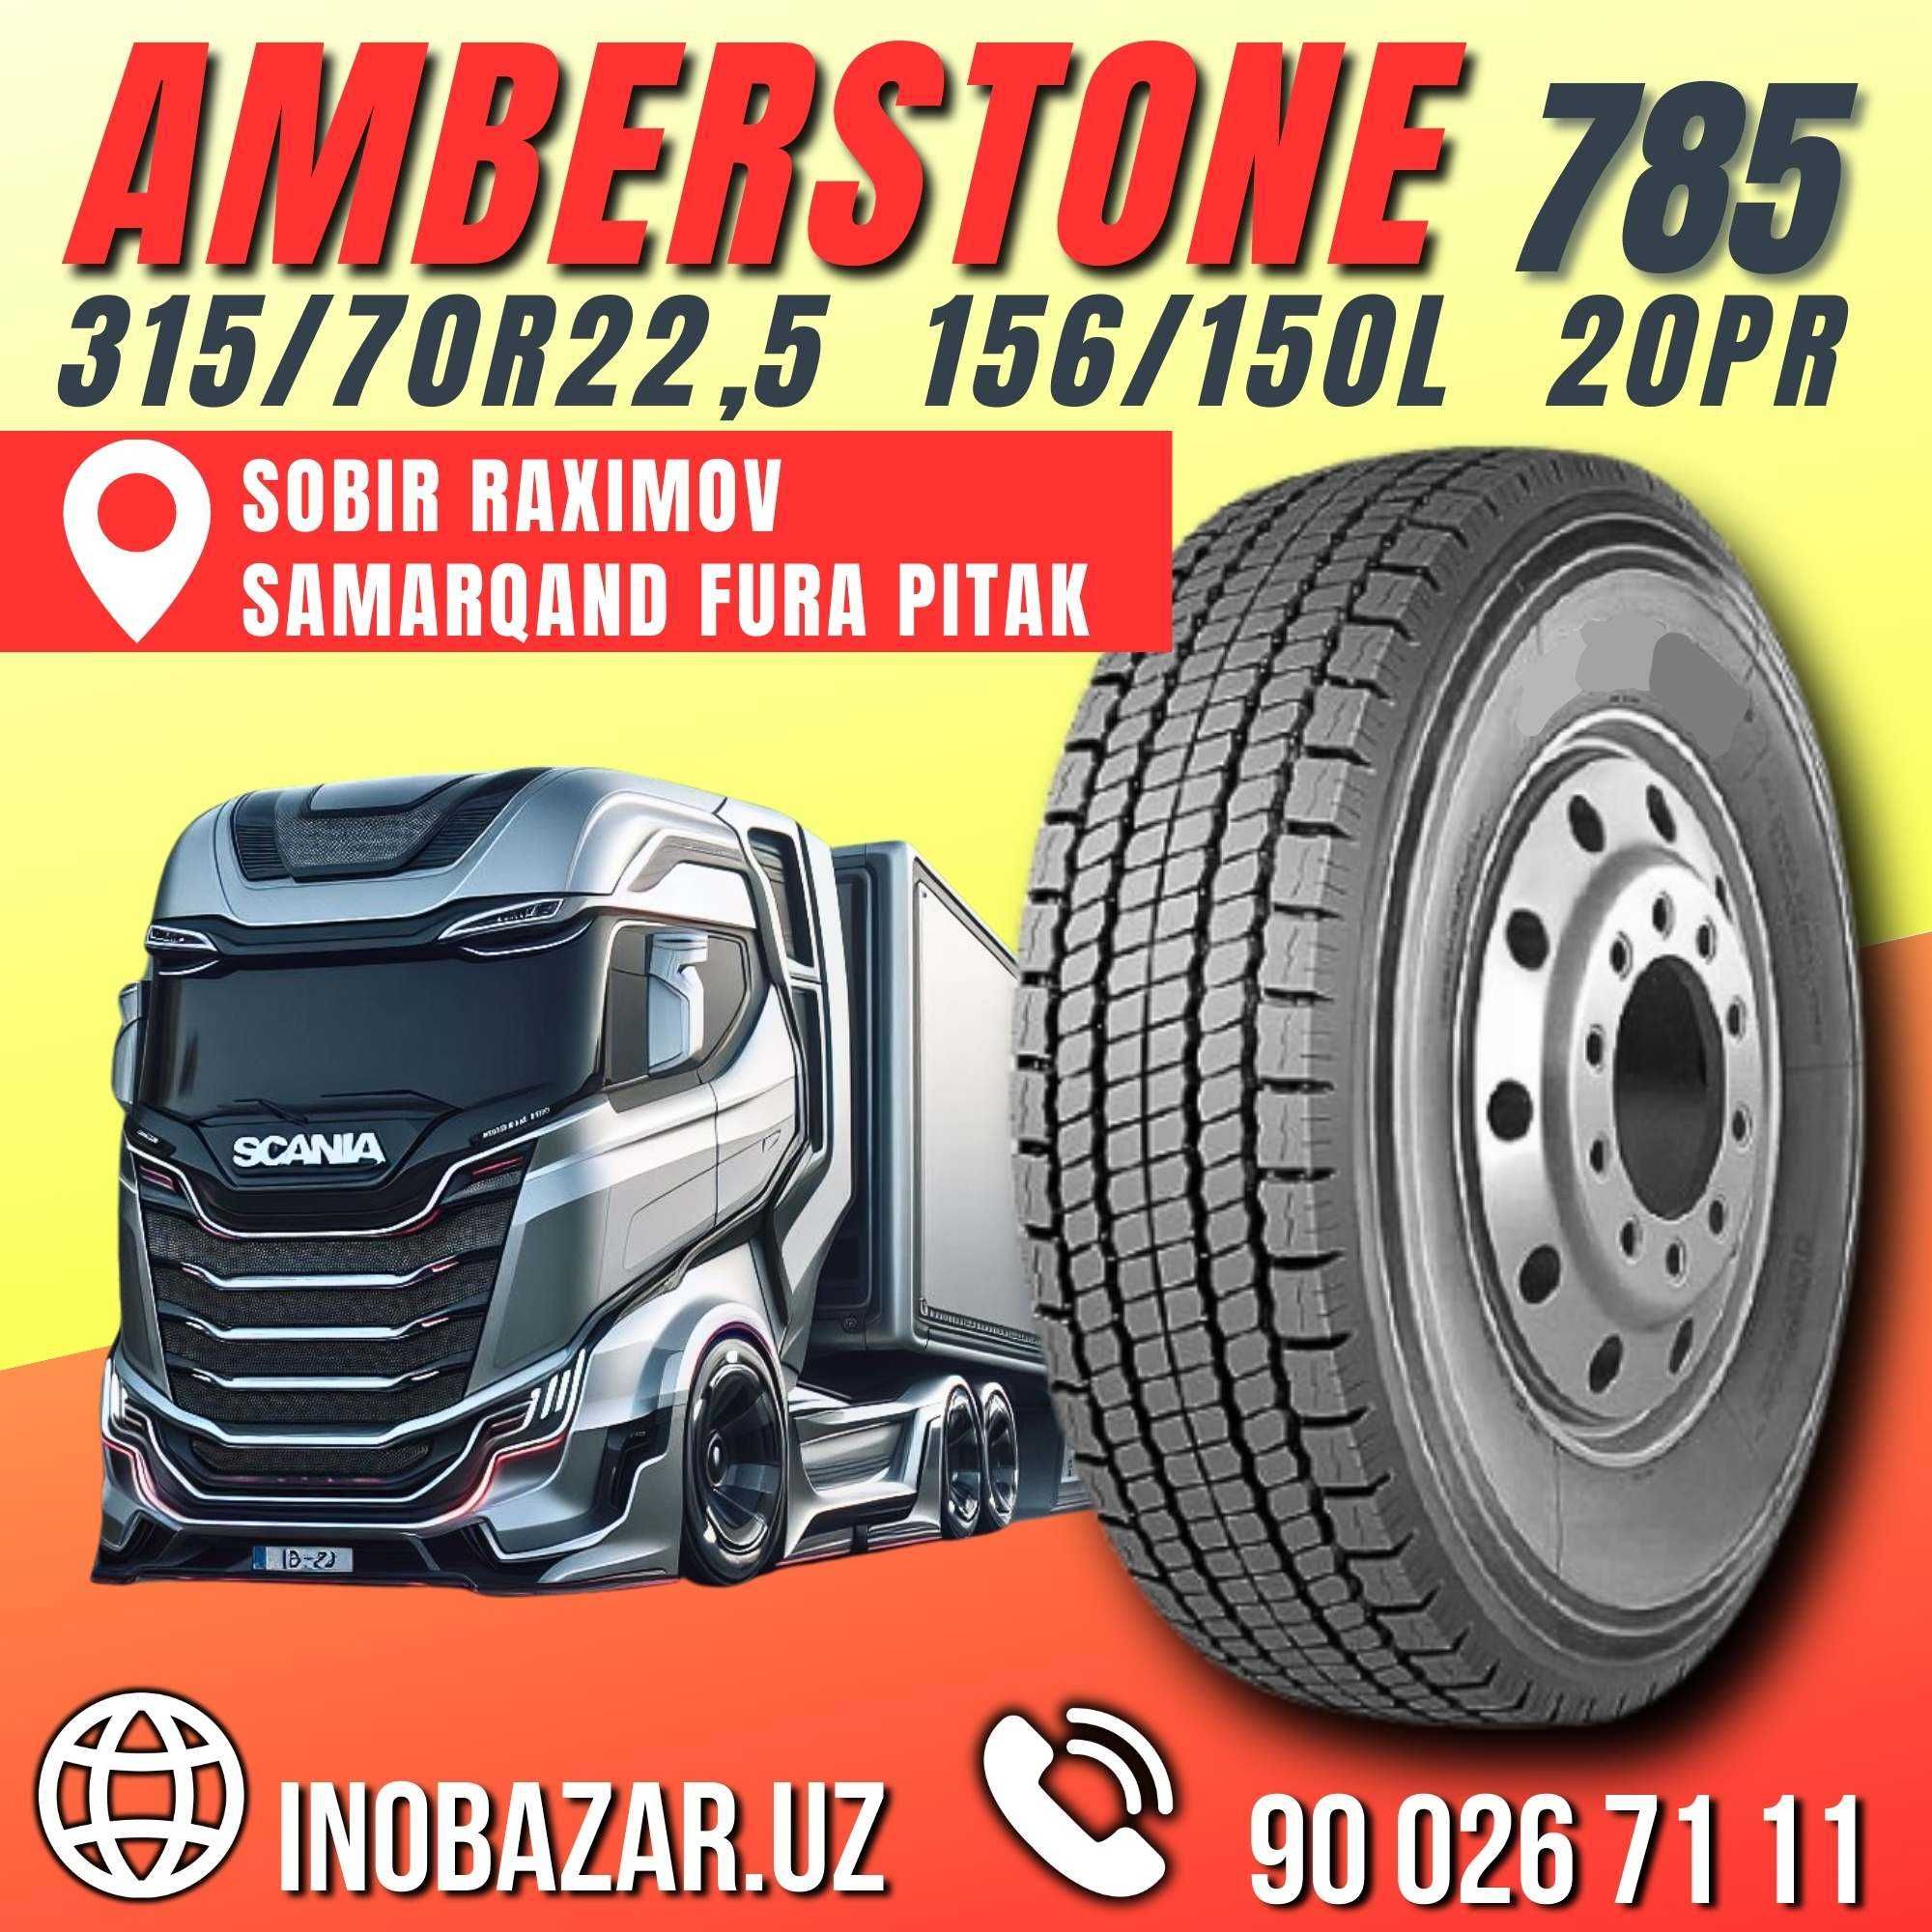 Грузовая шина Amberstone 785 | Шины | Balon